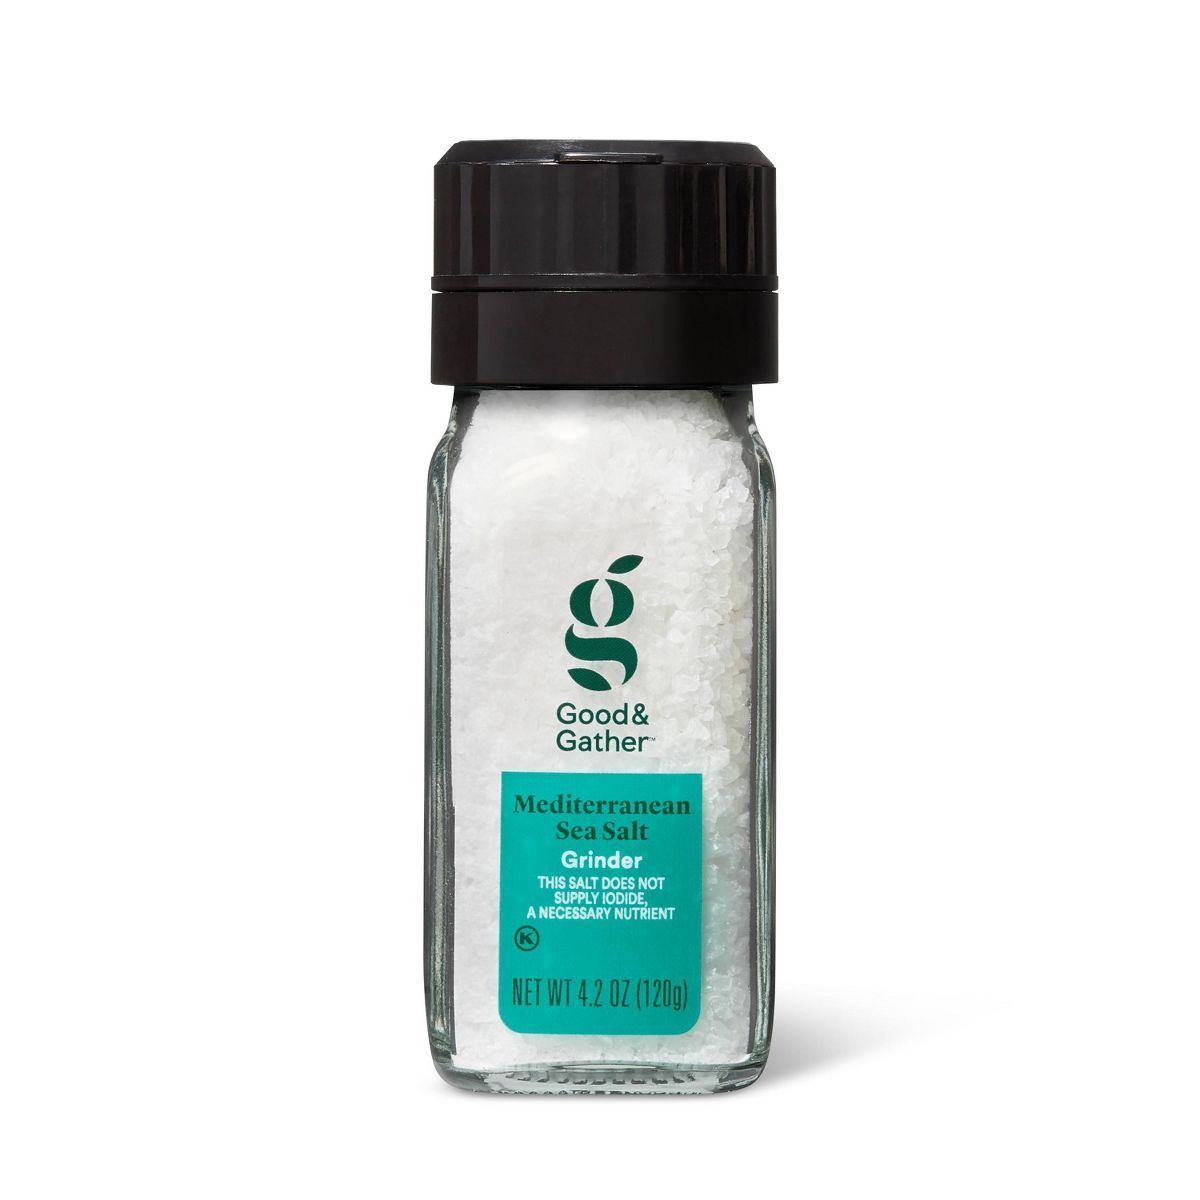 Mediterranean Sea Salt Grinder - 4.2oz - Good & Gather™ | Target